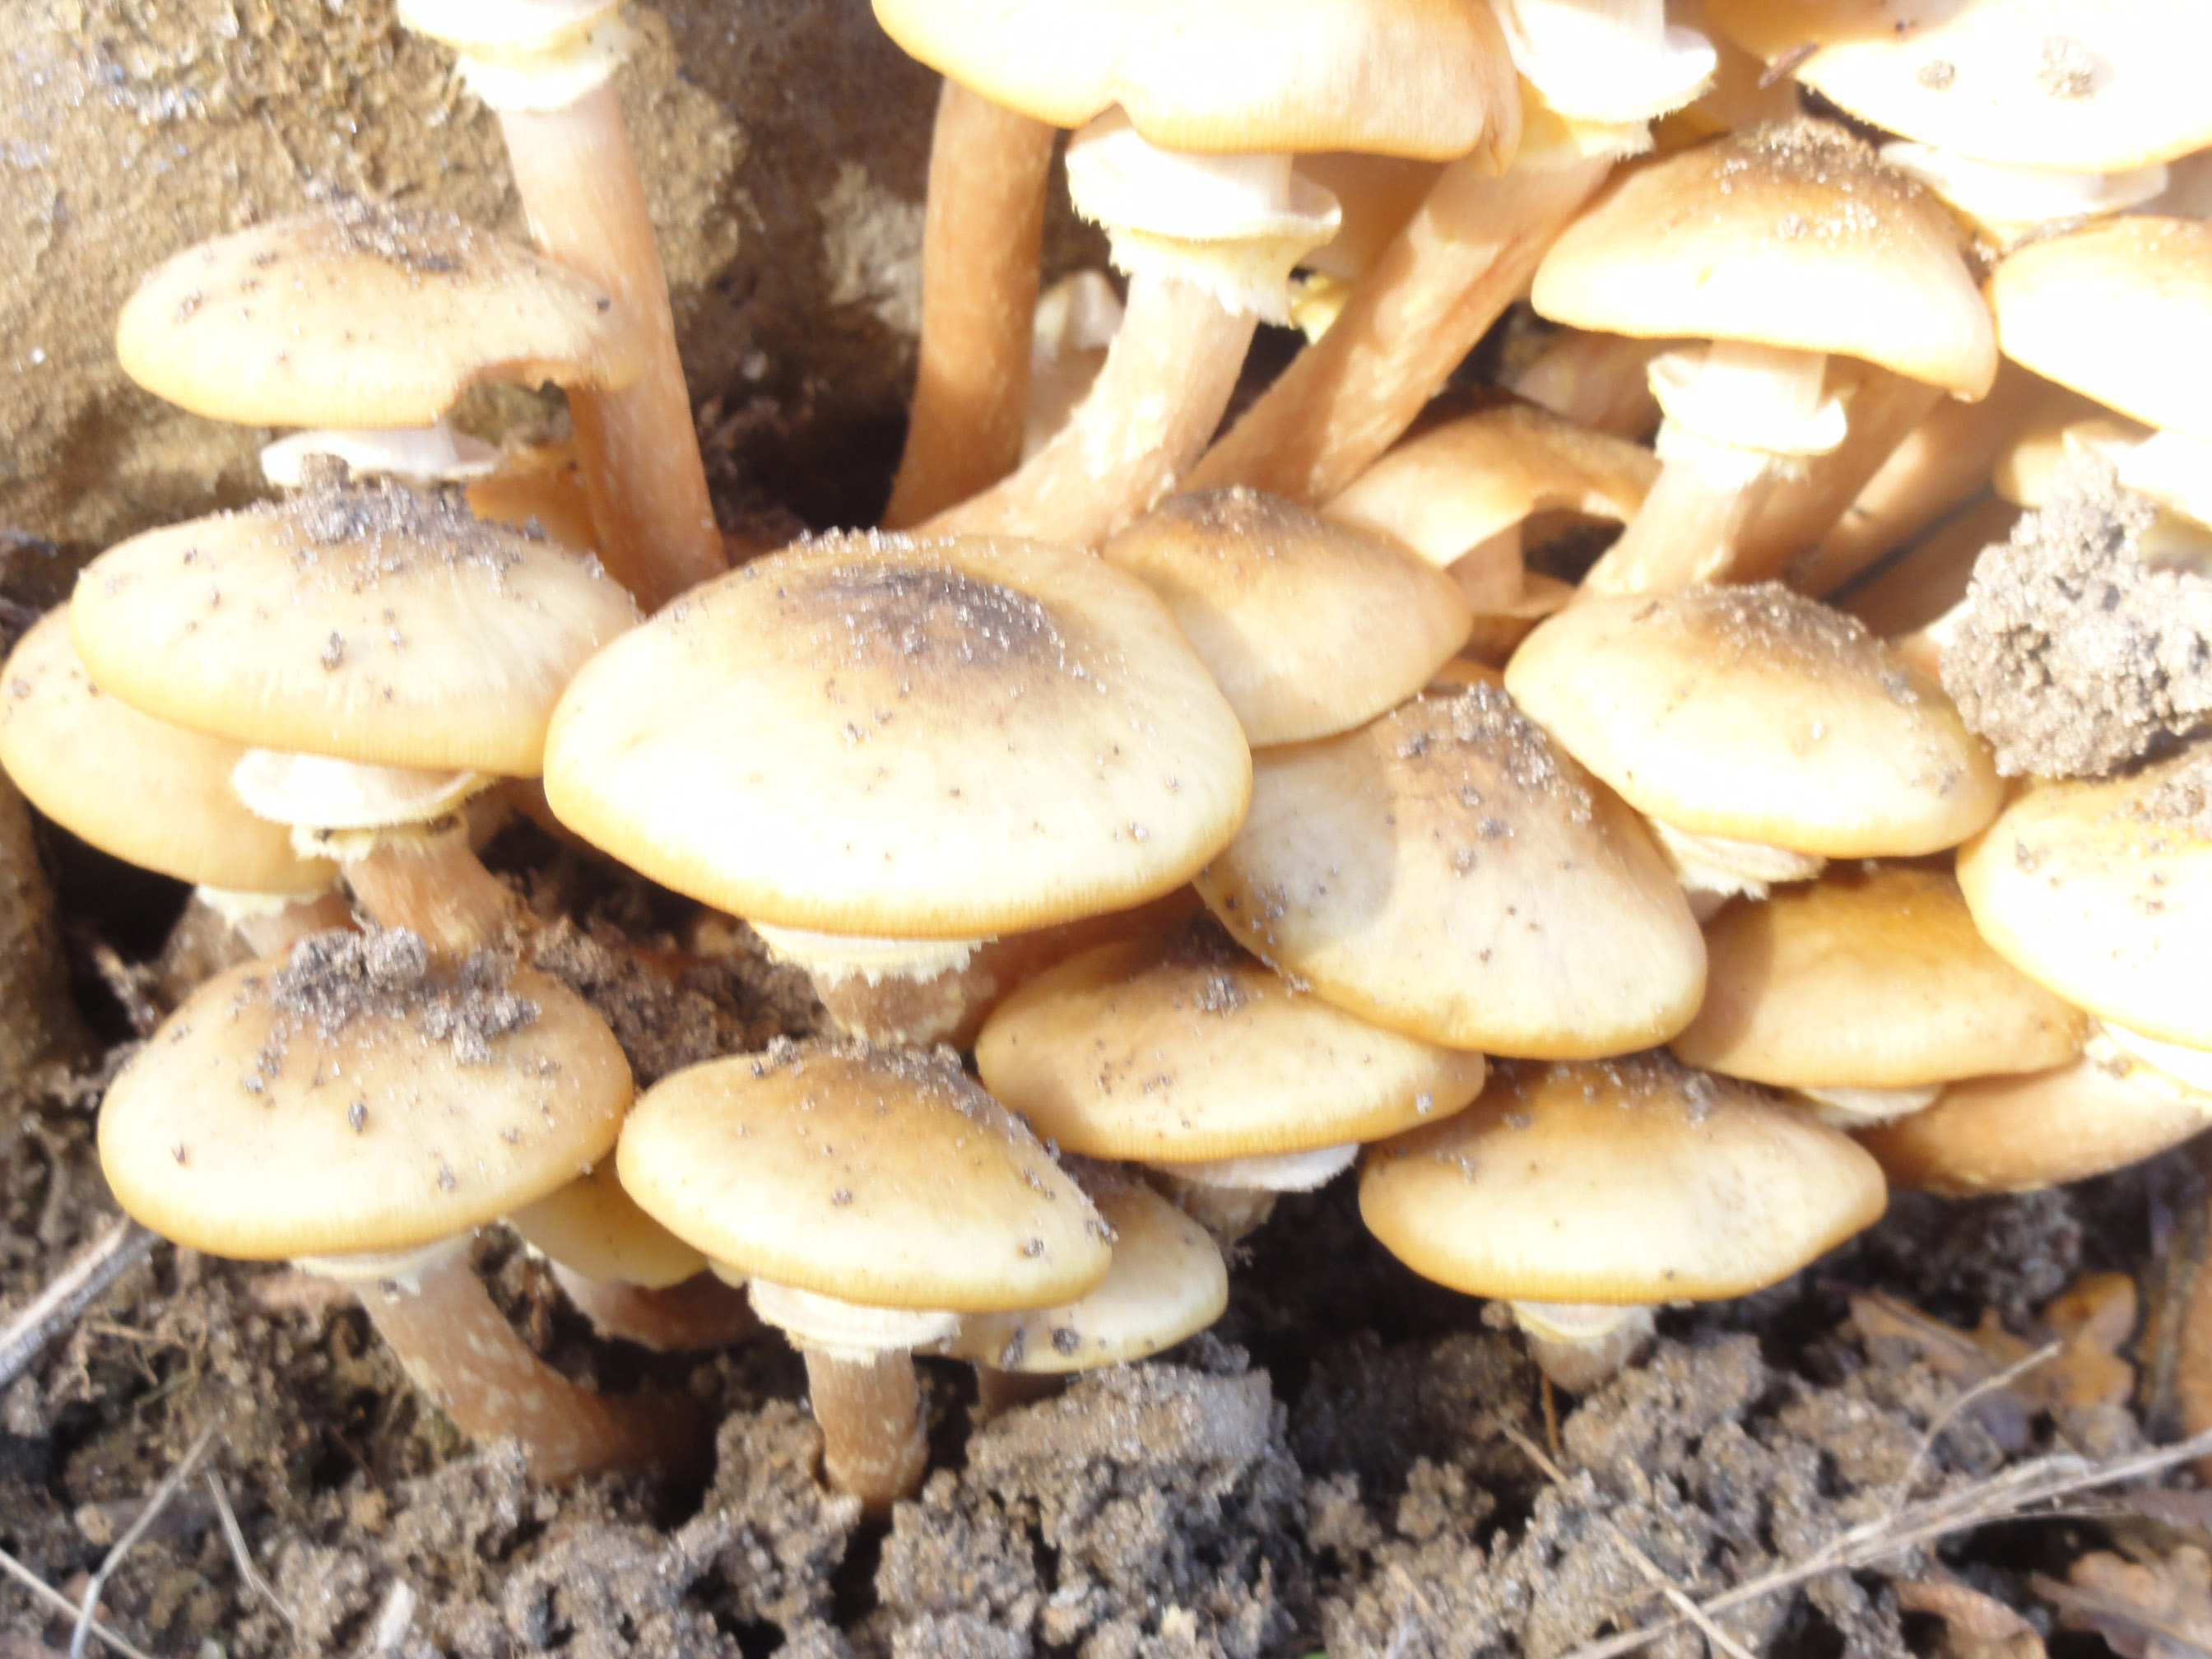 Armillaria mellea (the honey mushroom)